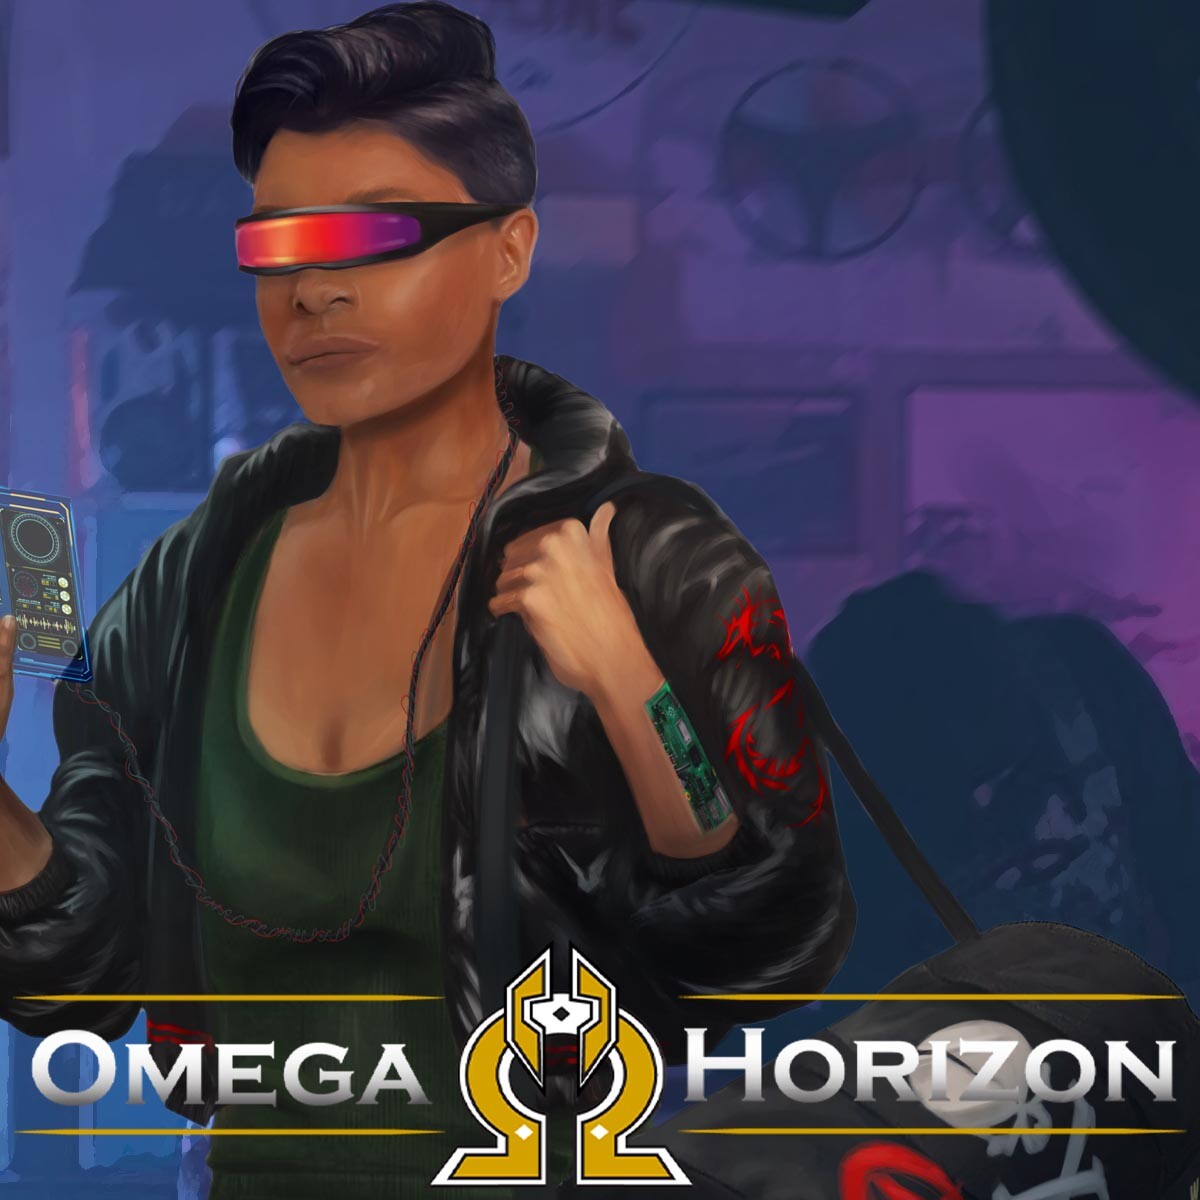 Omega help the hacker